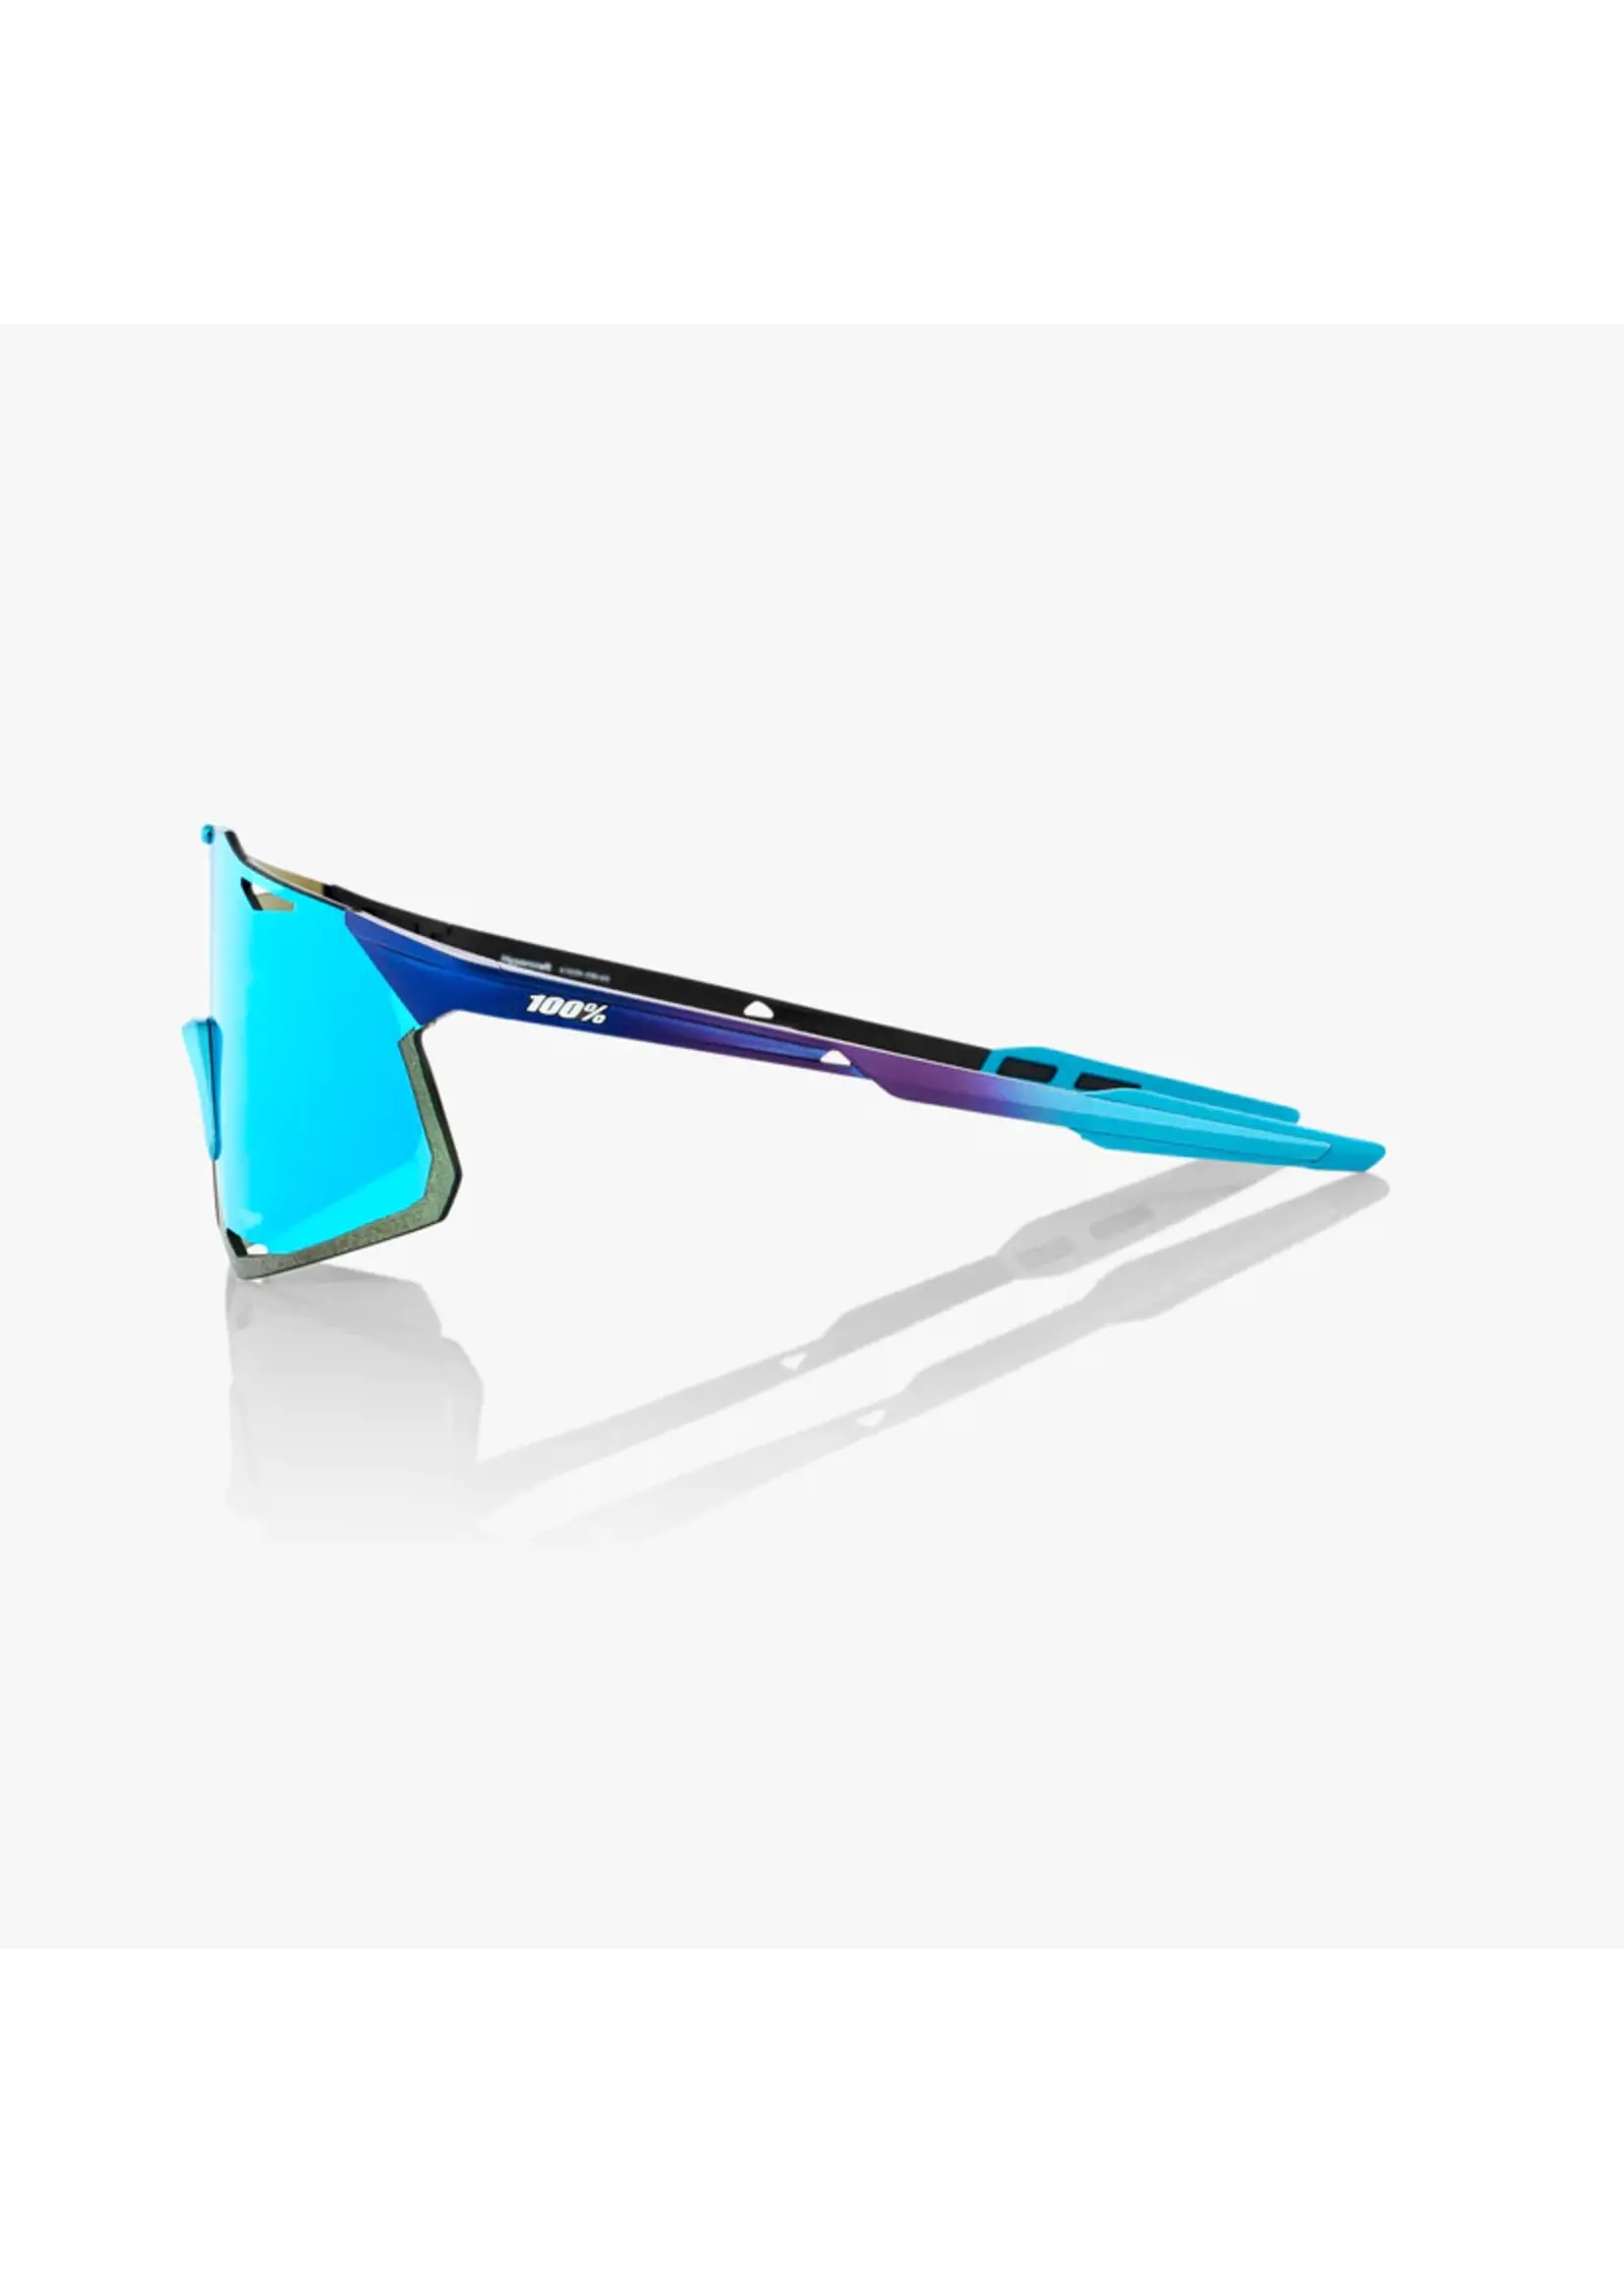 100 Percent 100% Hypercraft Sunglasses - Matte Metallic Into the Fade - Blue Topaz Multilayer Mirror Lens